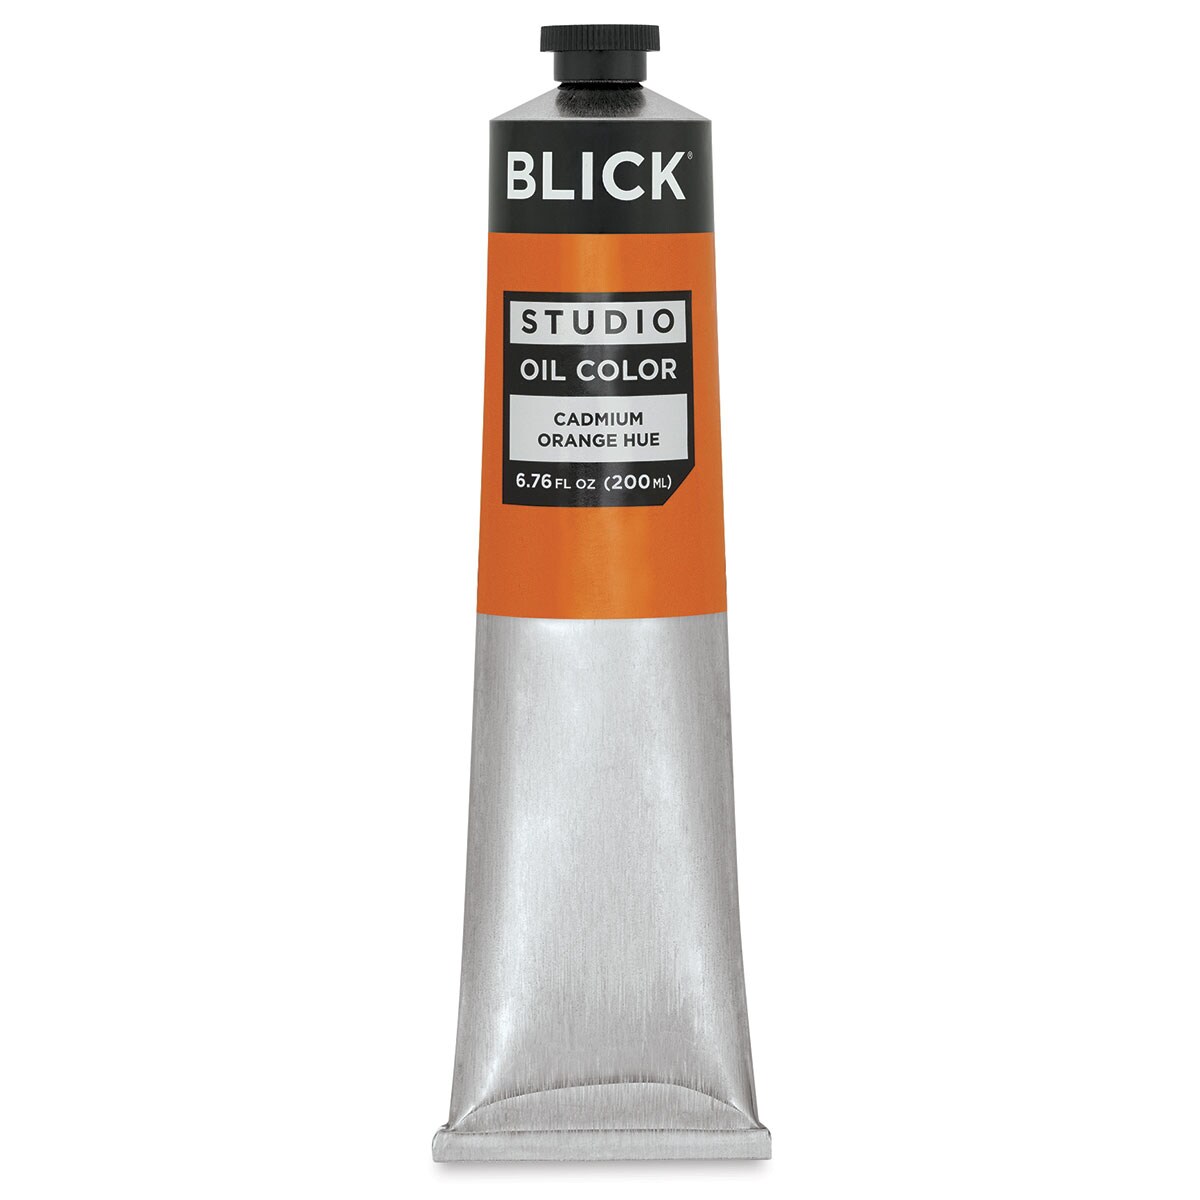 Blick Oil Colors - Cadmium Orange Hue, 200 ml tube